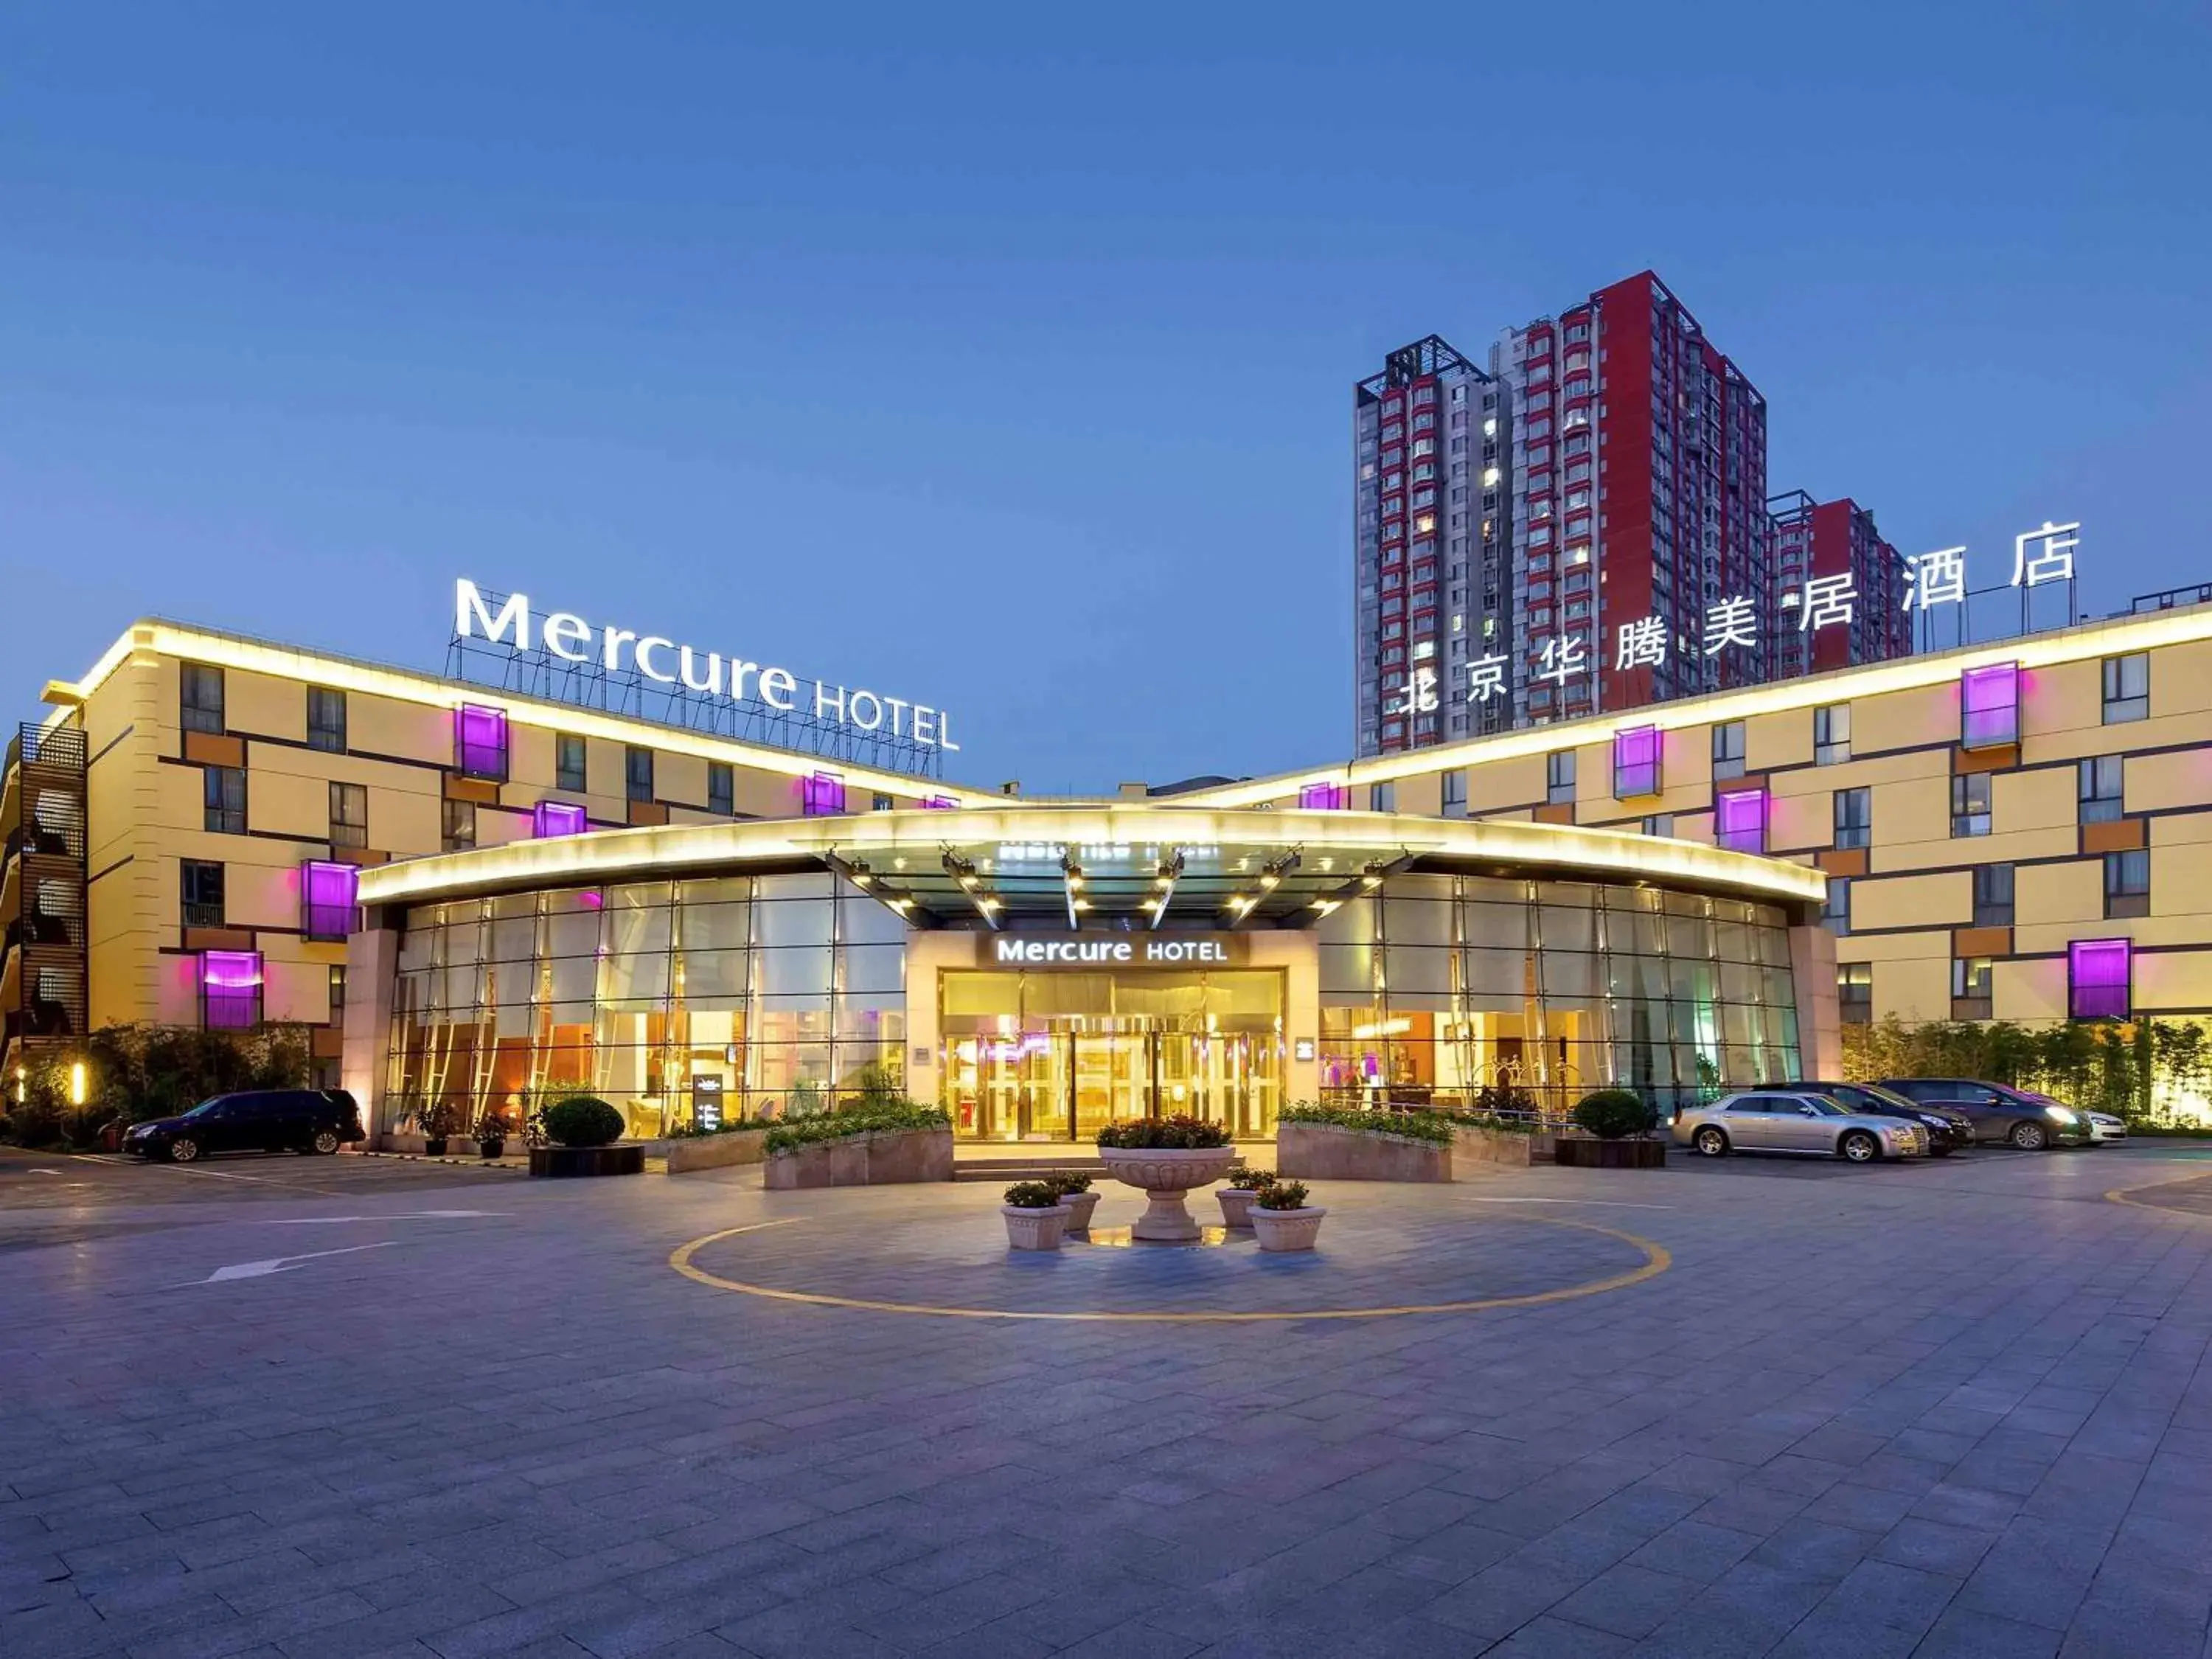 Property building in Mercure Beijing Downtown Hotel